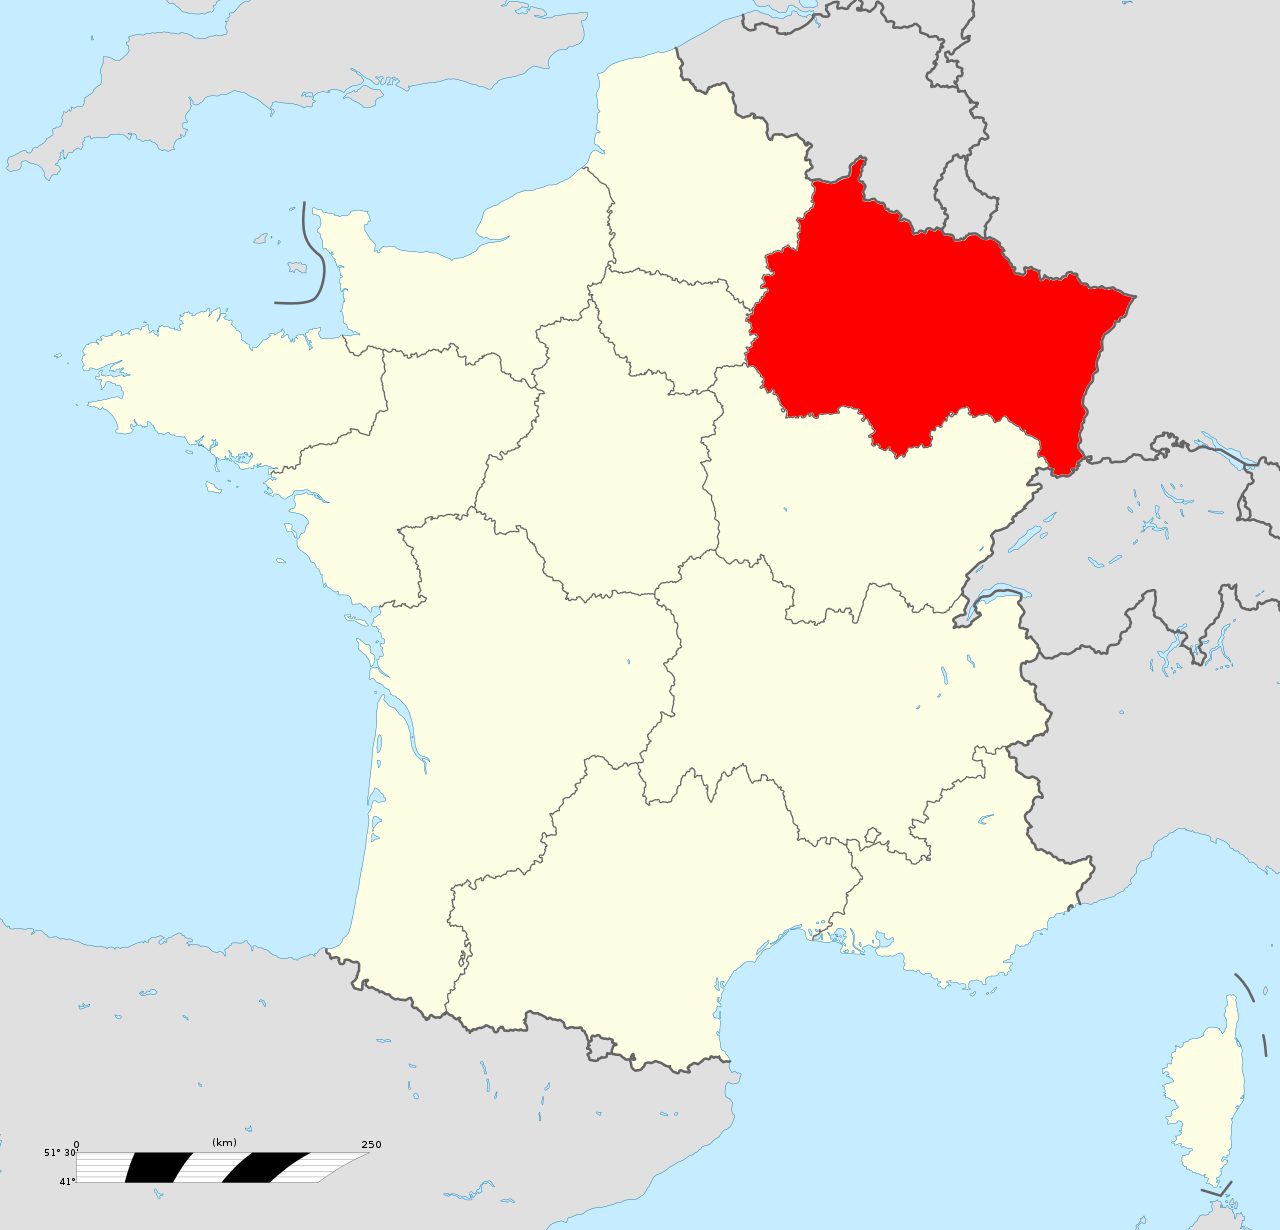 Backhoe Urbex location or around the region Grand Est (Haute-Saône), France